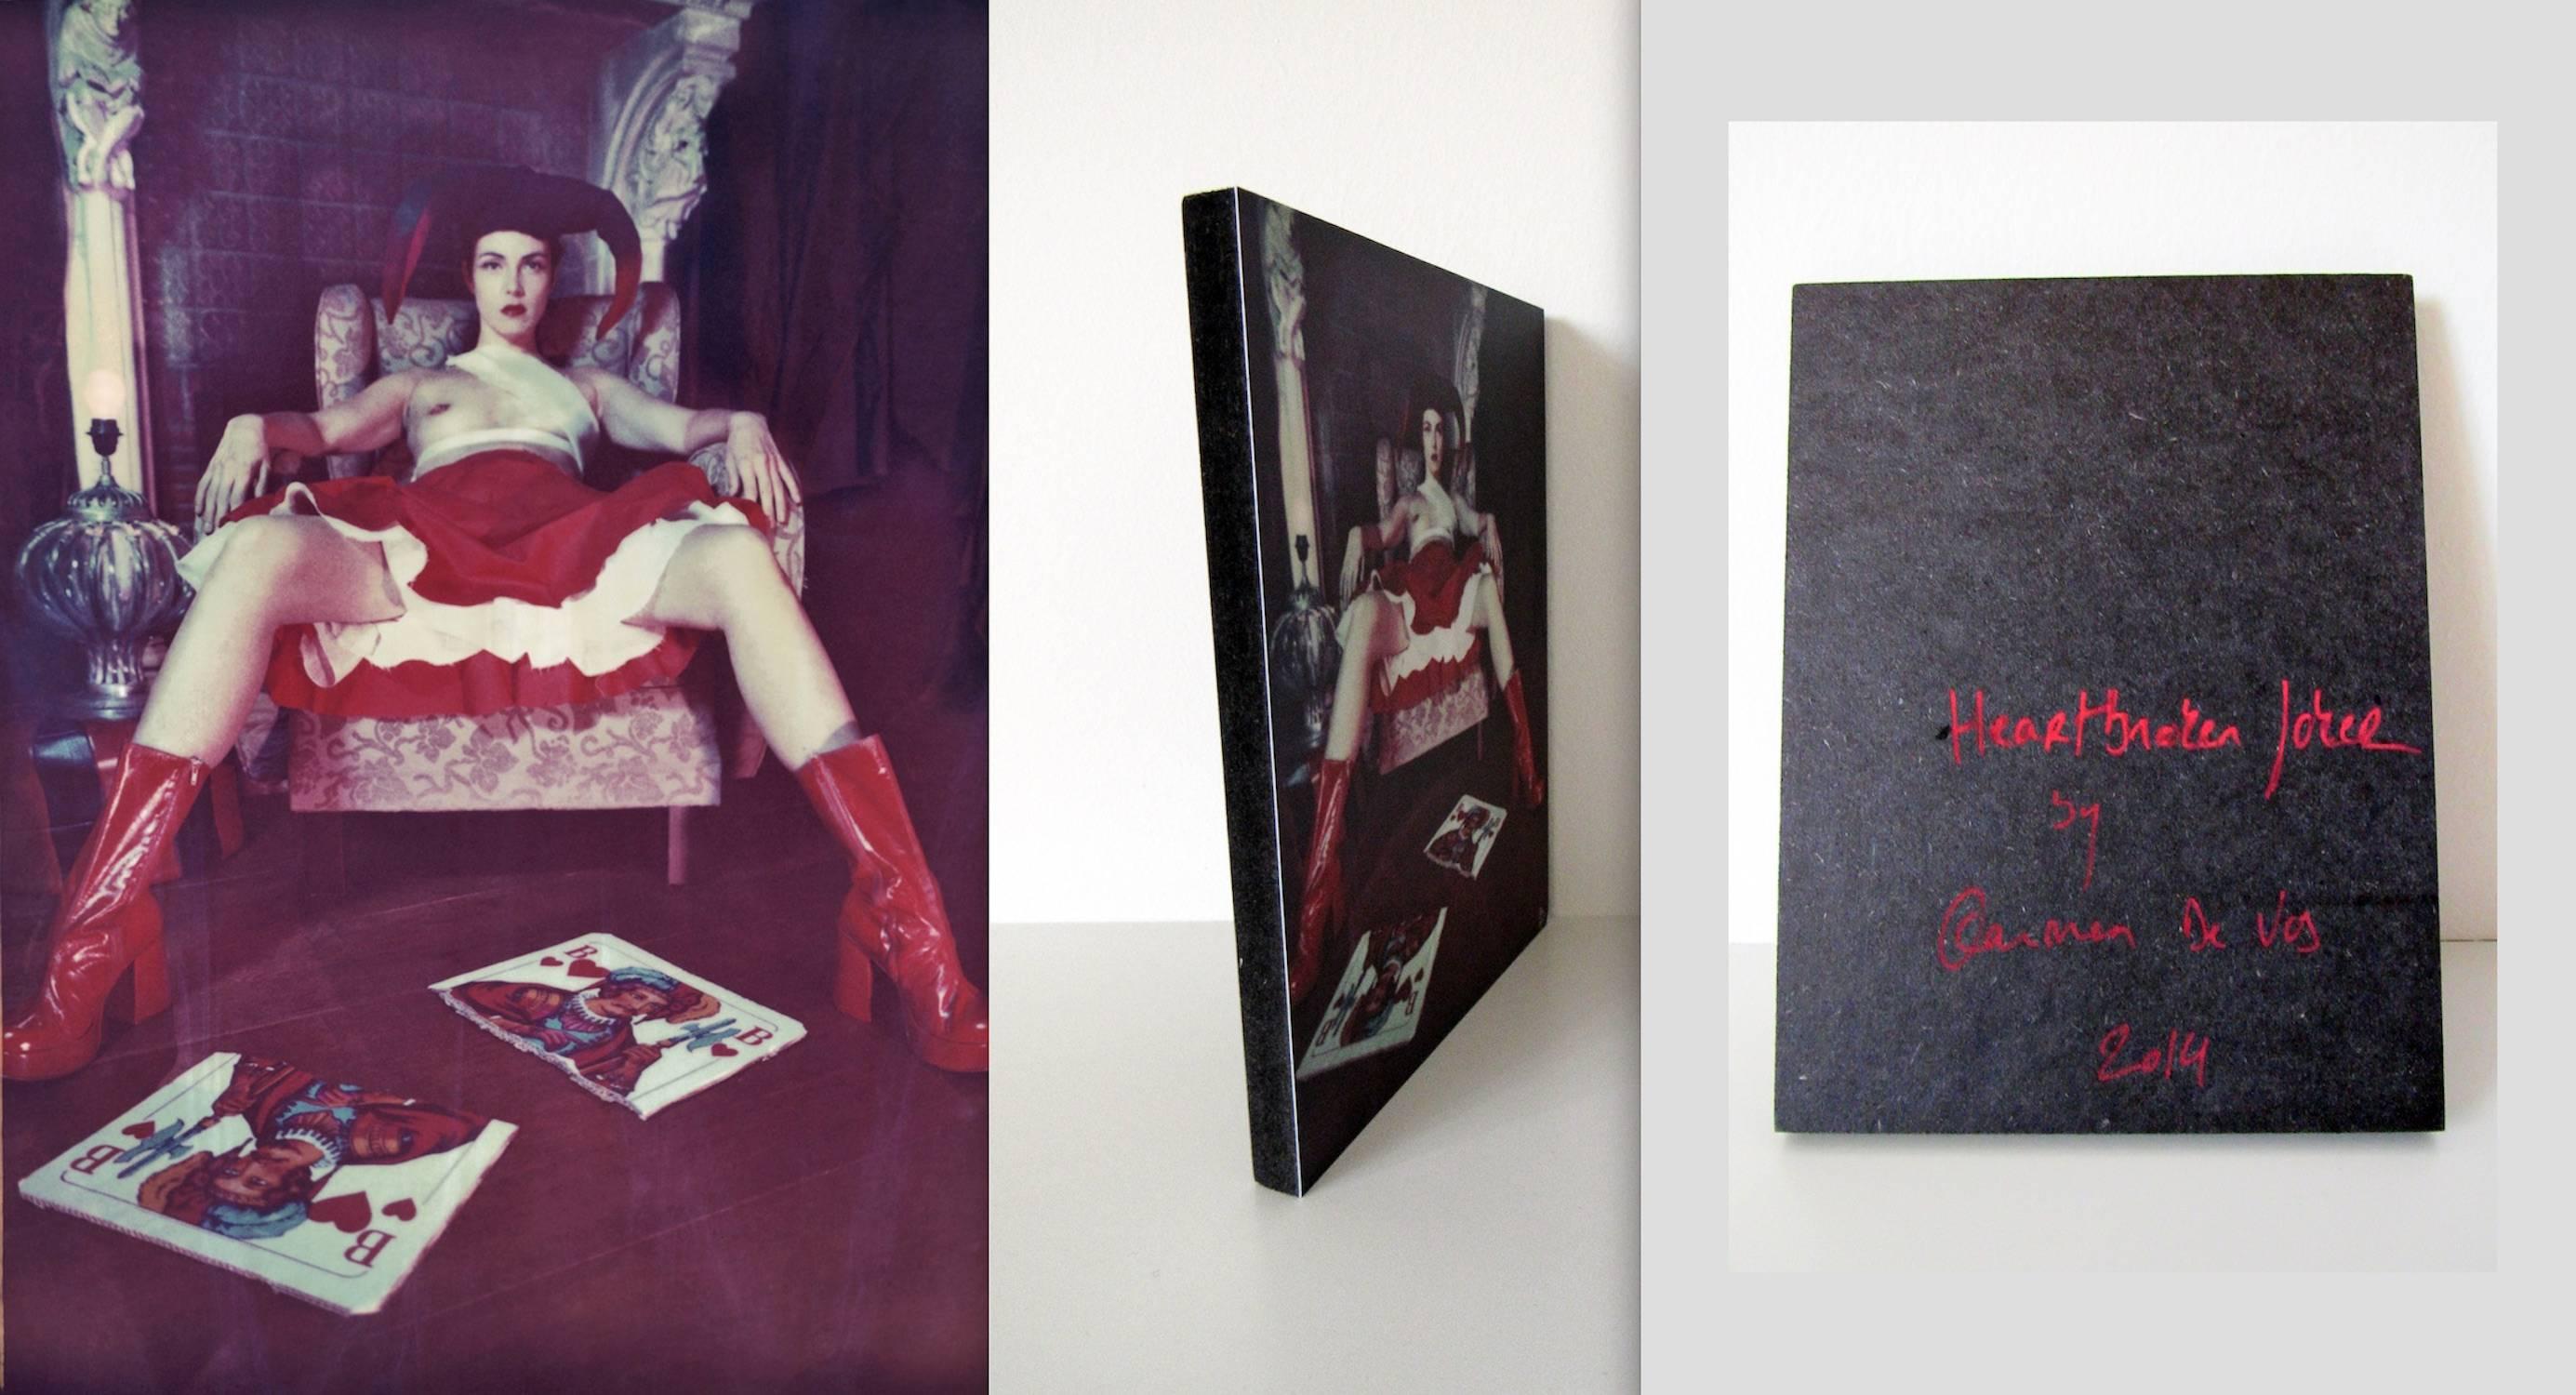 Heartbroken Joker (Odd Stories) Polaroid, Contemporary, 21st Century, Women - Photograph by Carmen de Vos